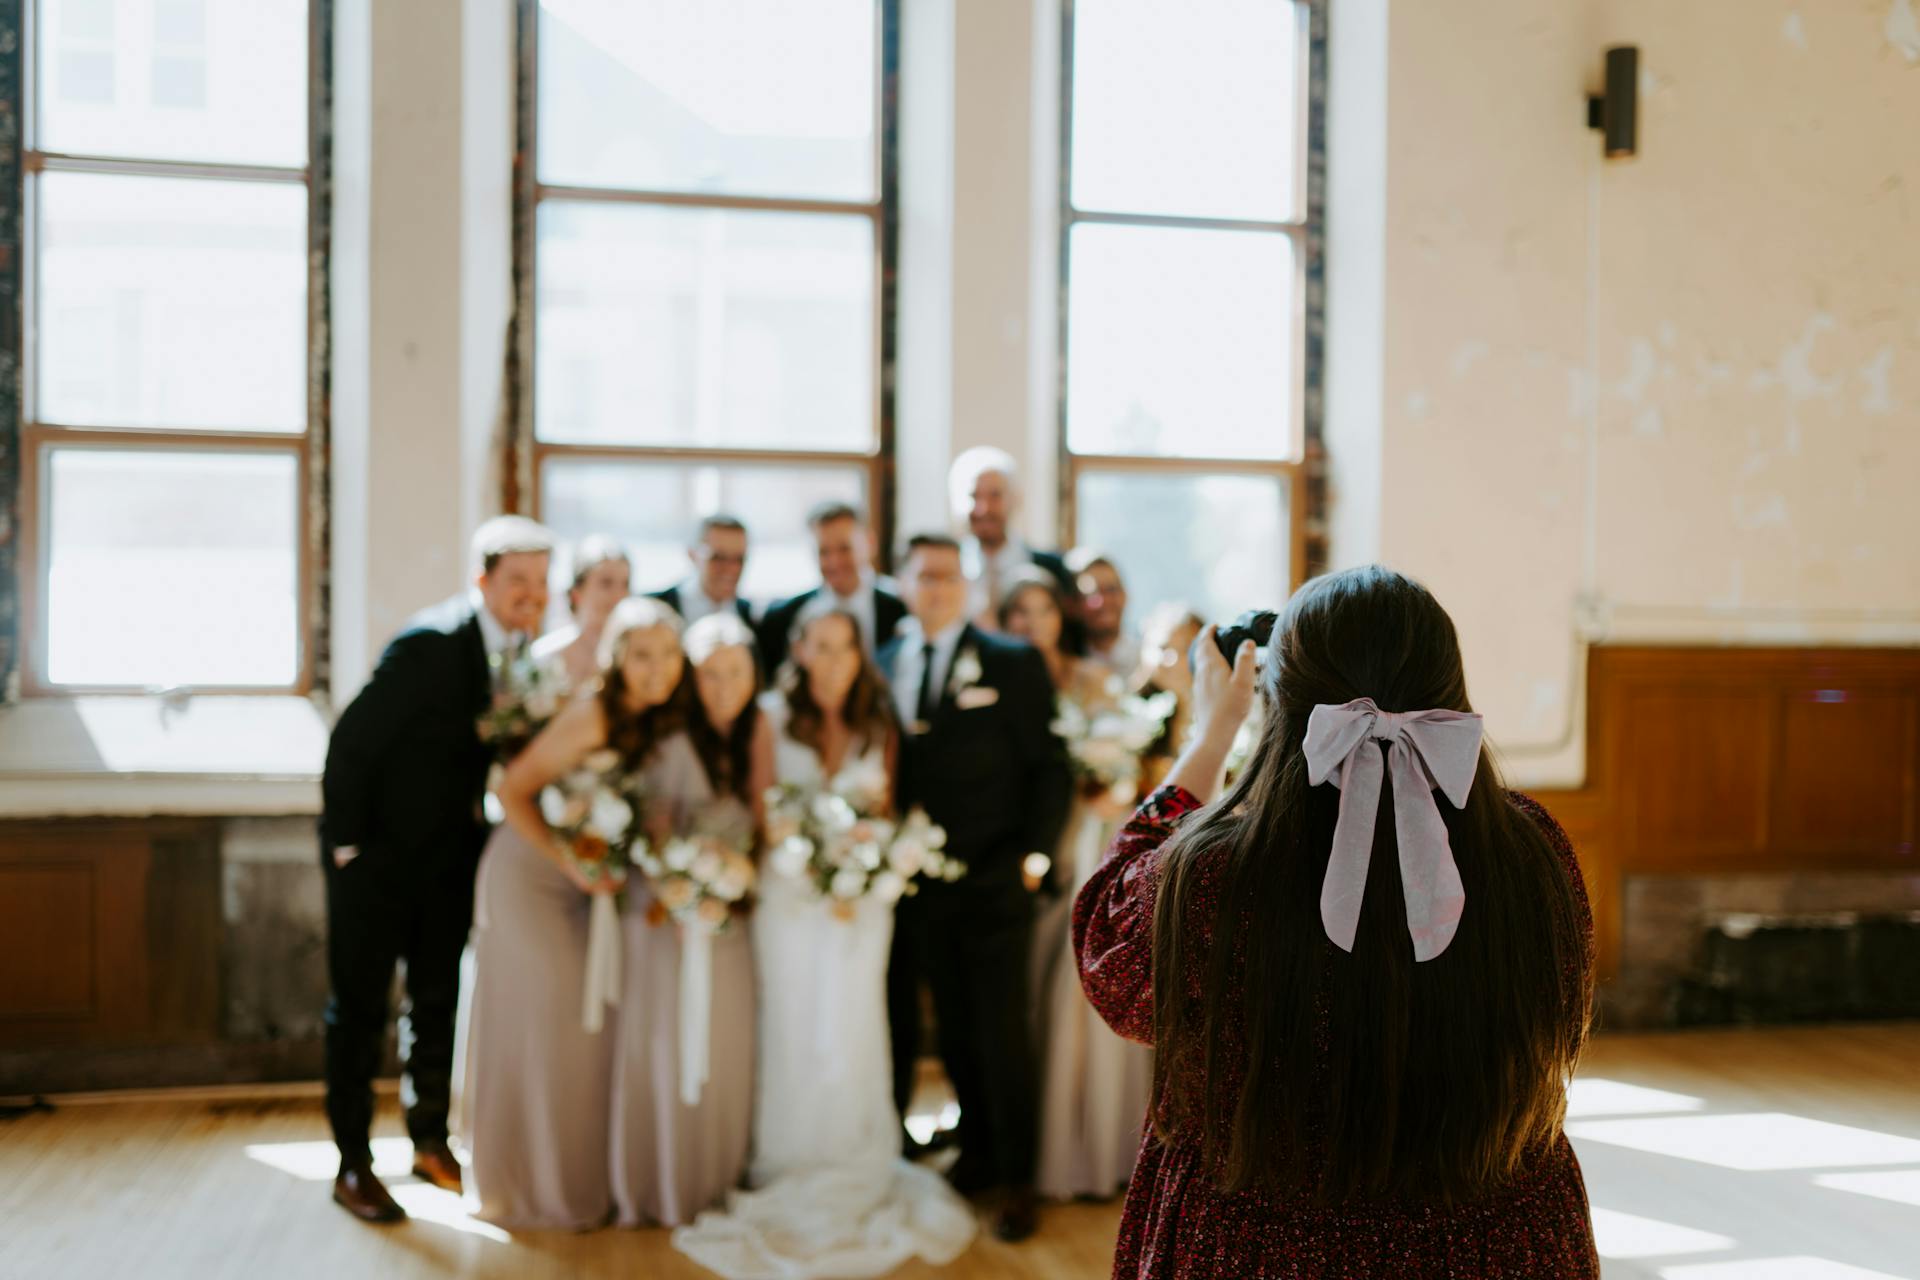 Una mujer fotografiando a un grupo en una boda | Foto: Pexels